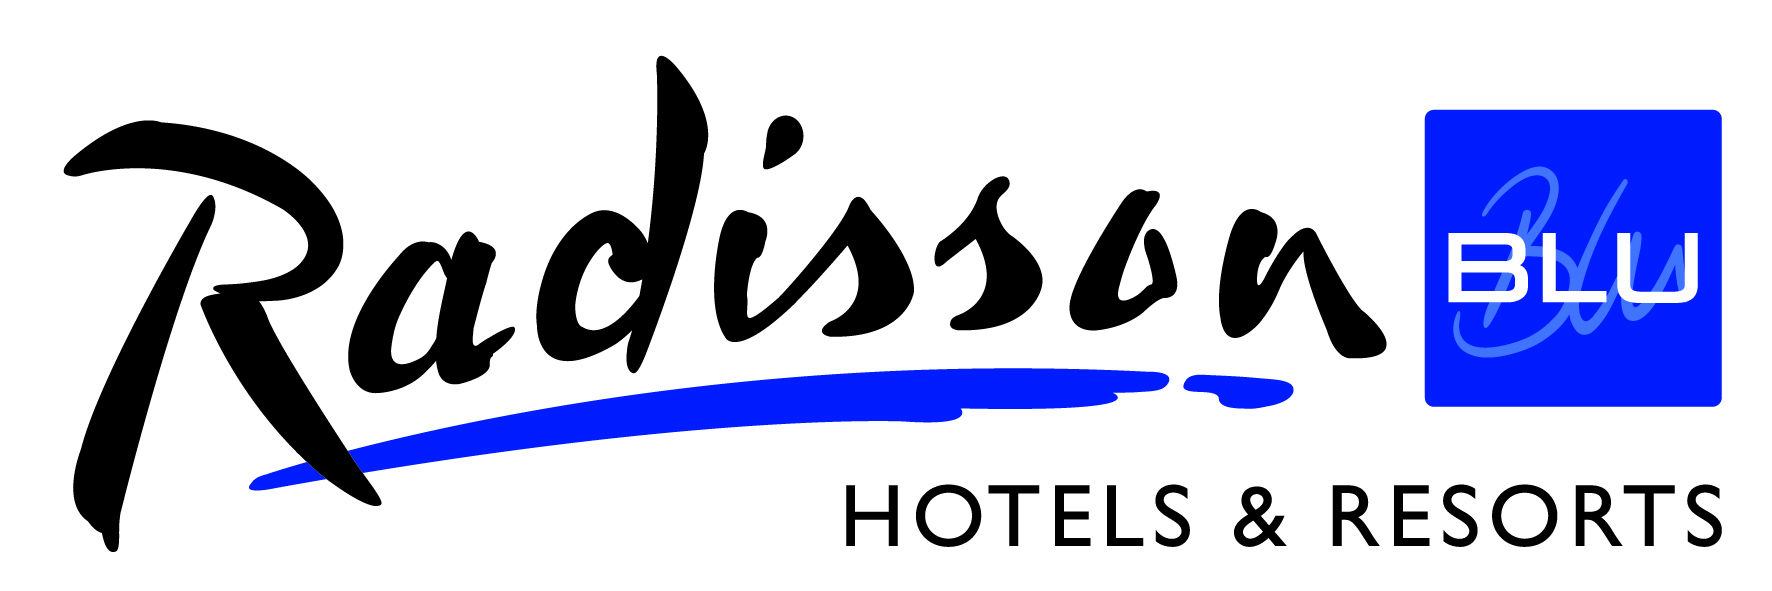 image of radisson blu hotel logo